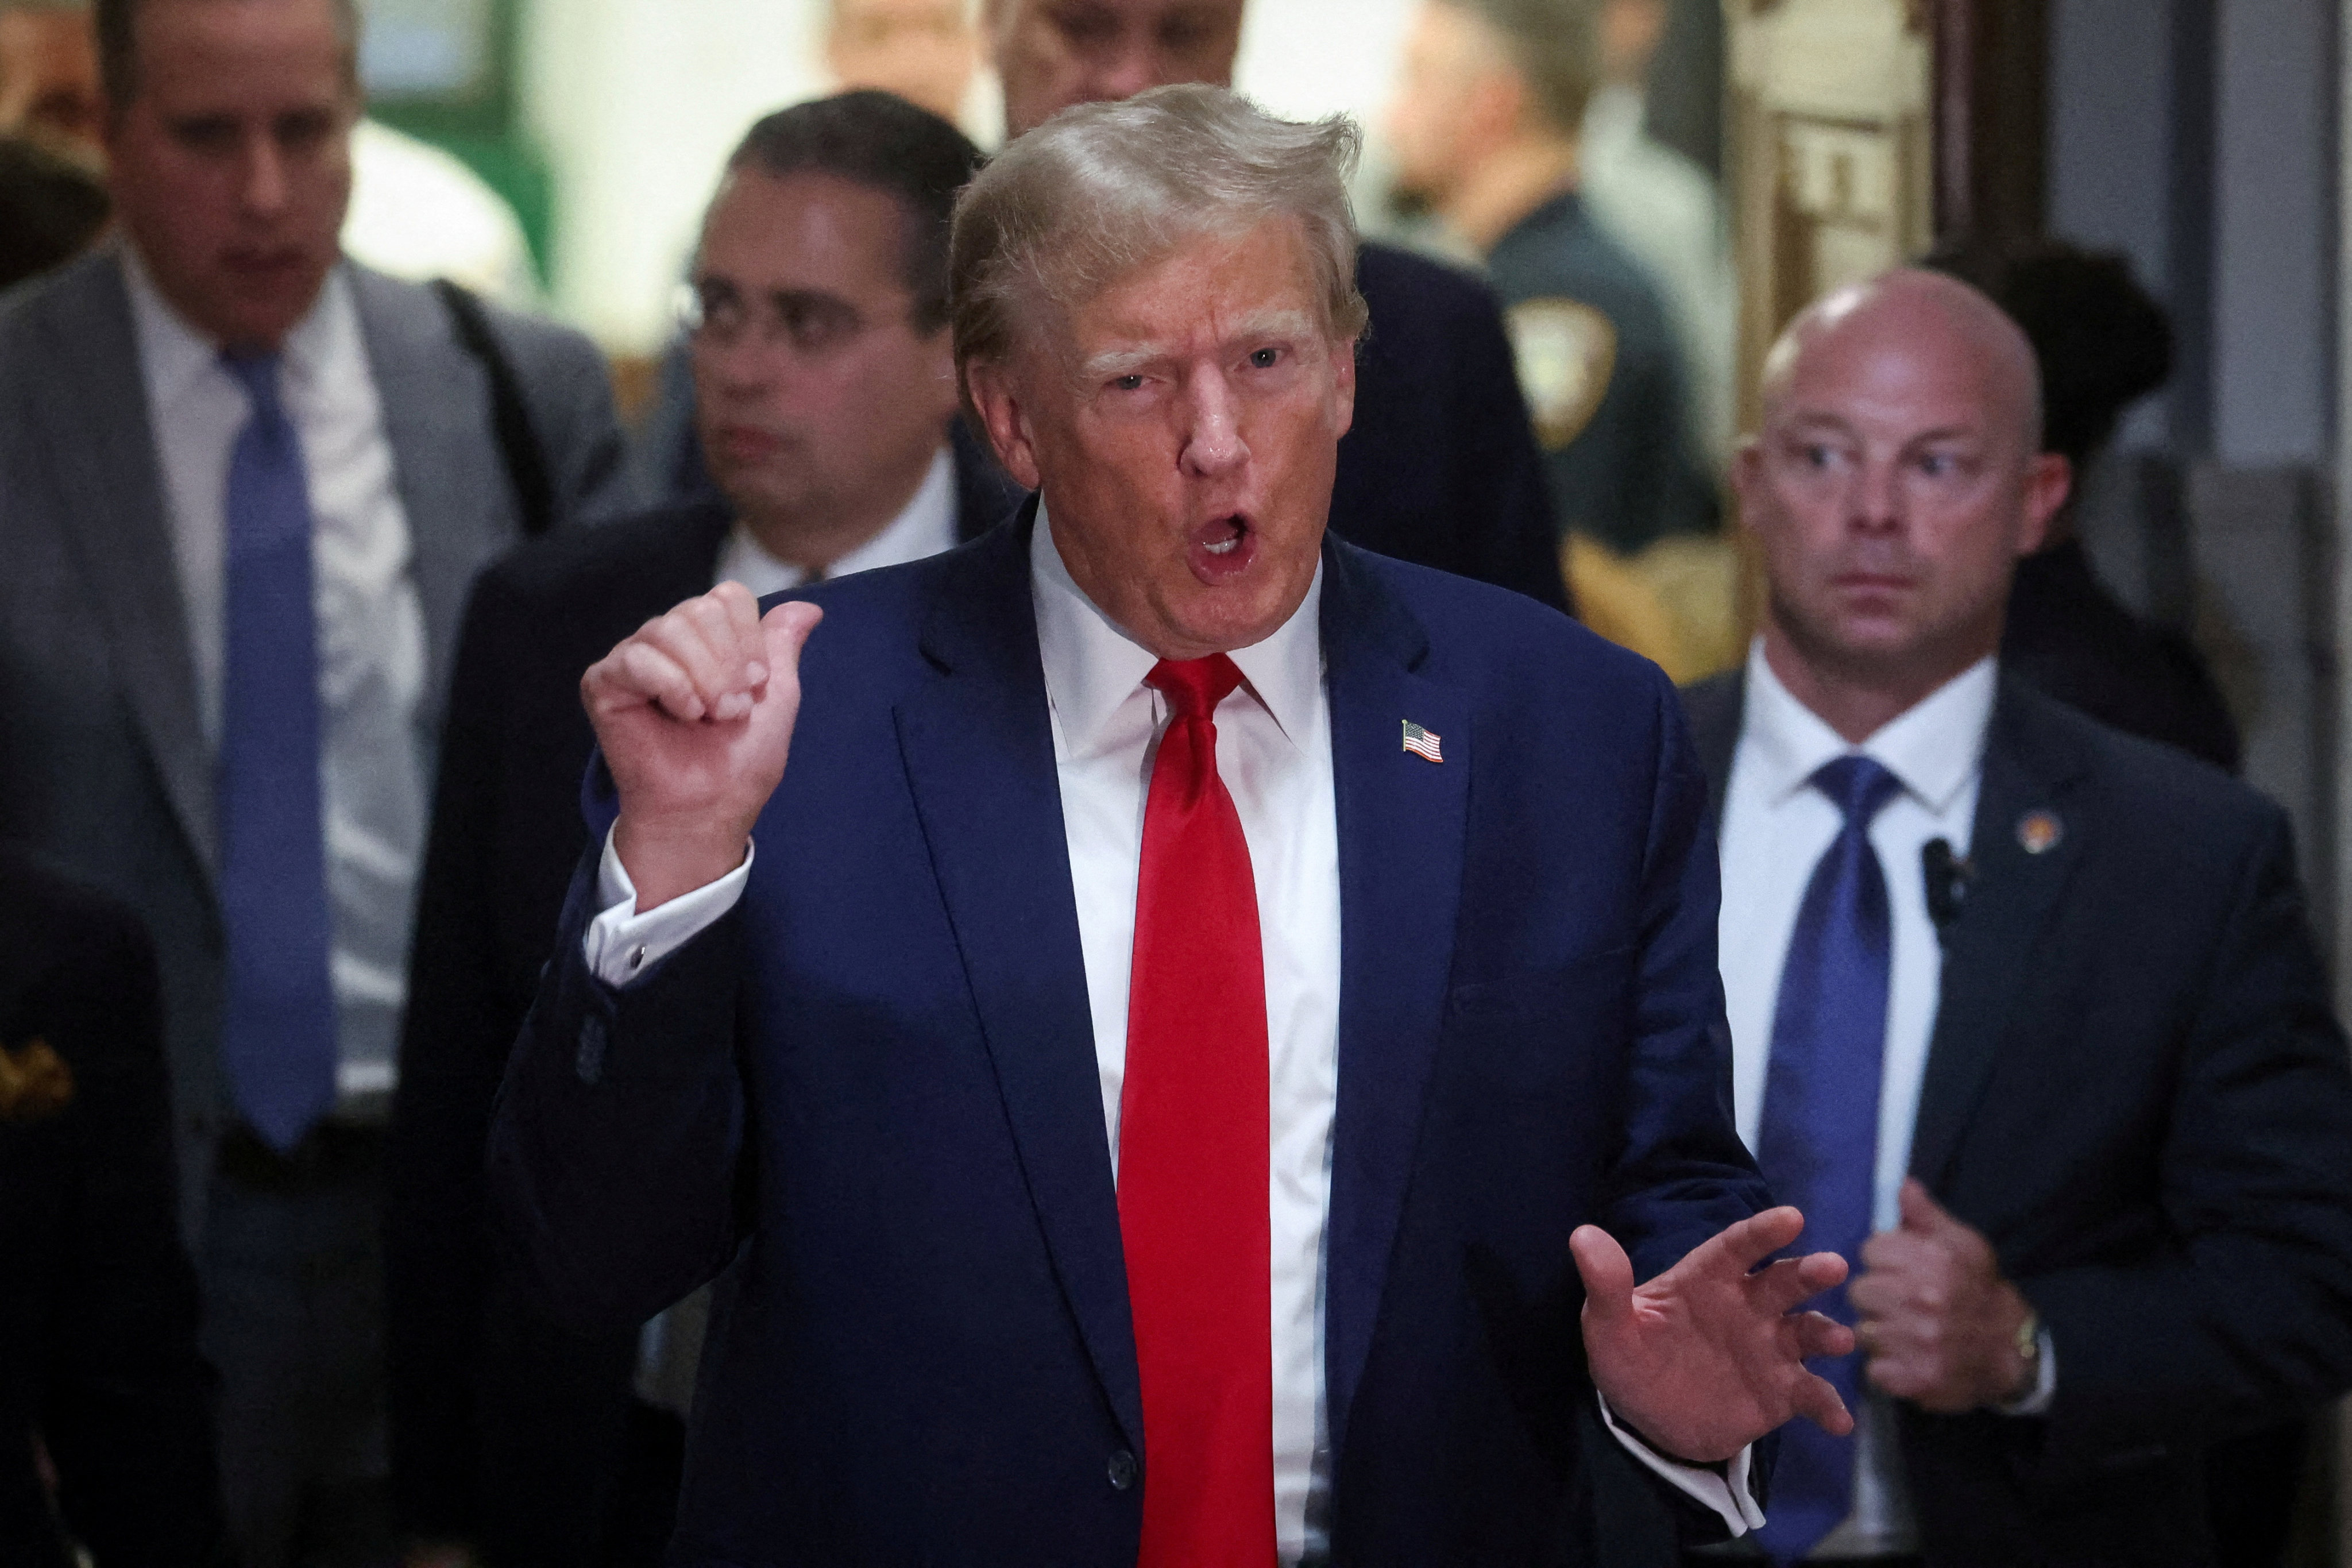 Donald Trump at the Trump Organization civil fraud trial in New York last week. Photo: Reuters